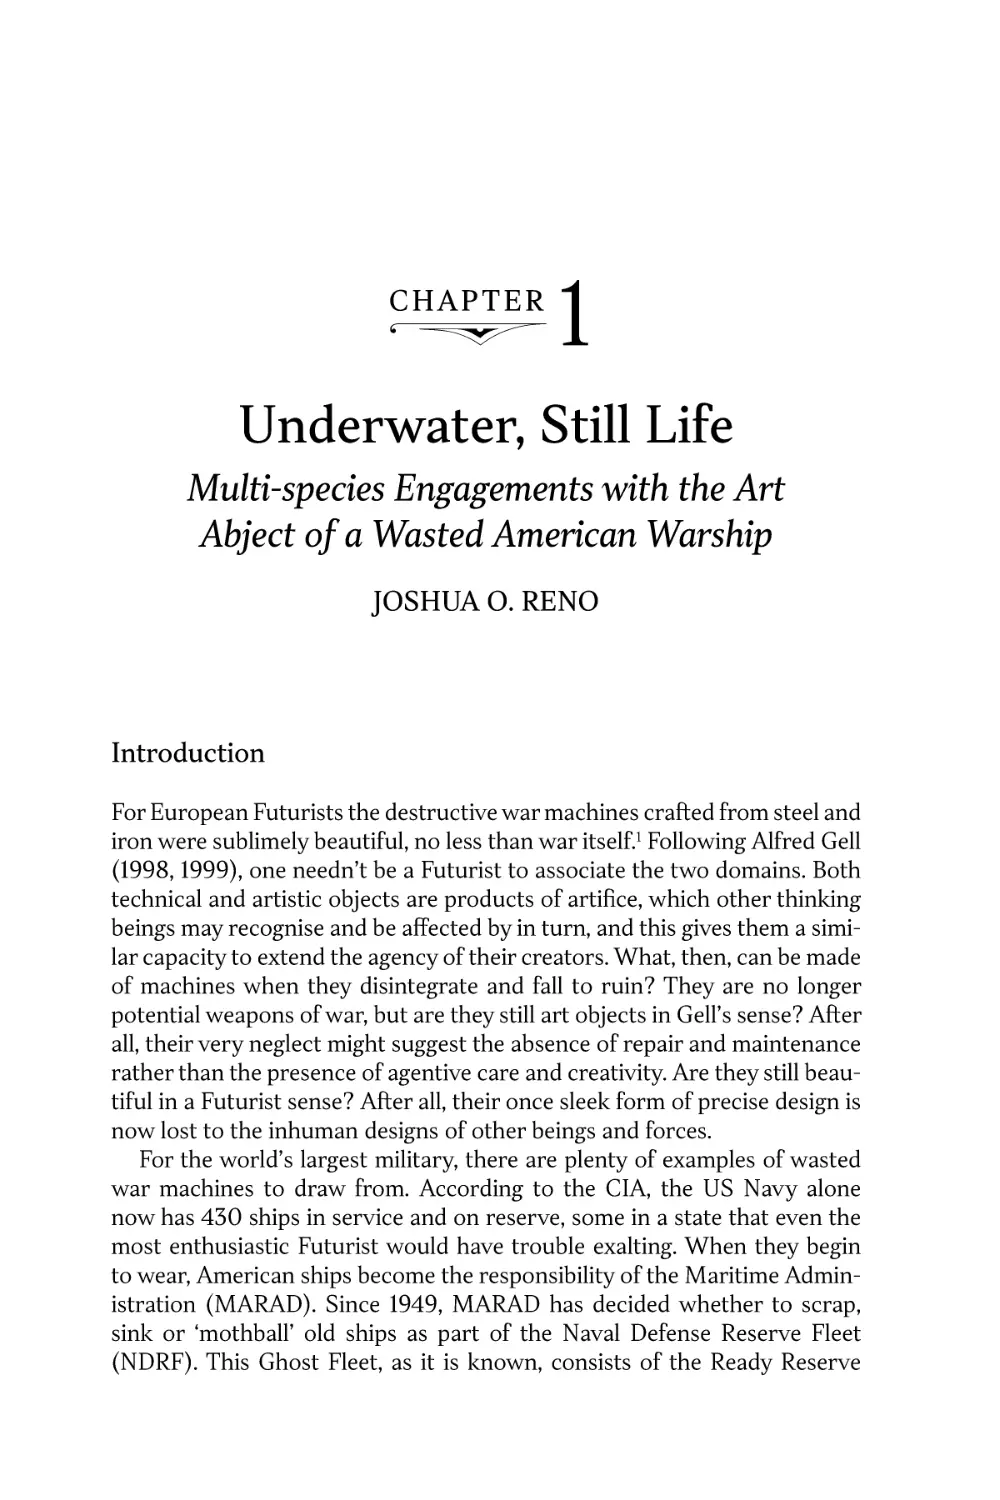 Chapter 1. Underwater, Still Life